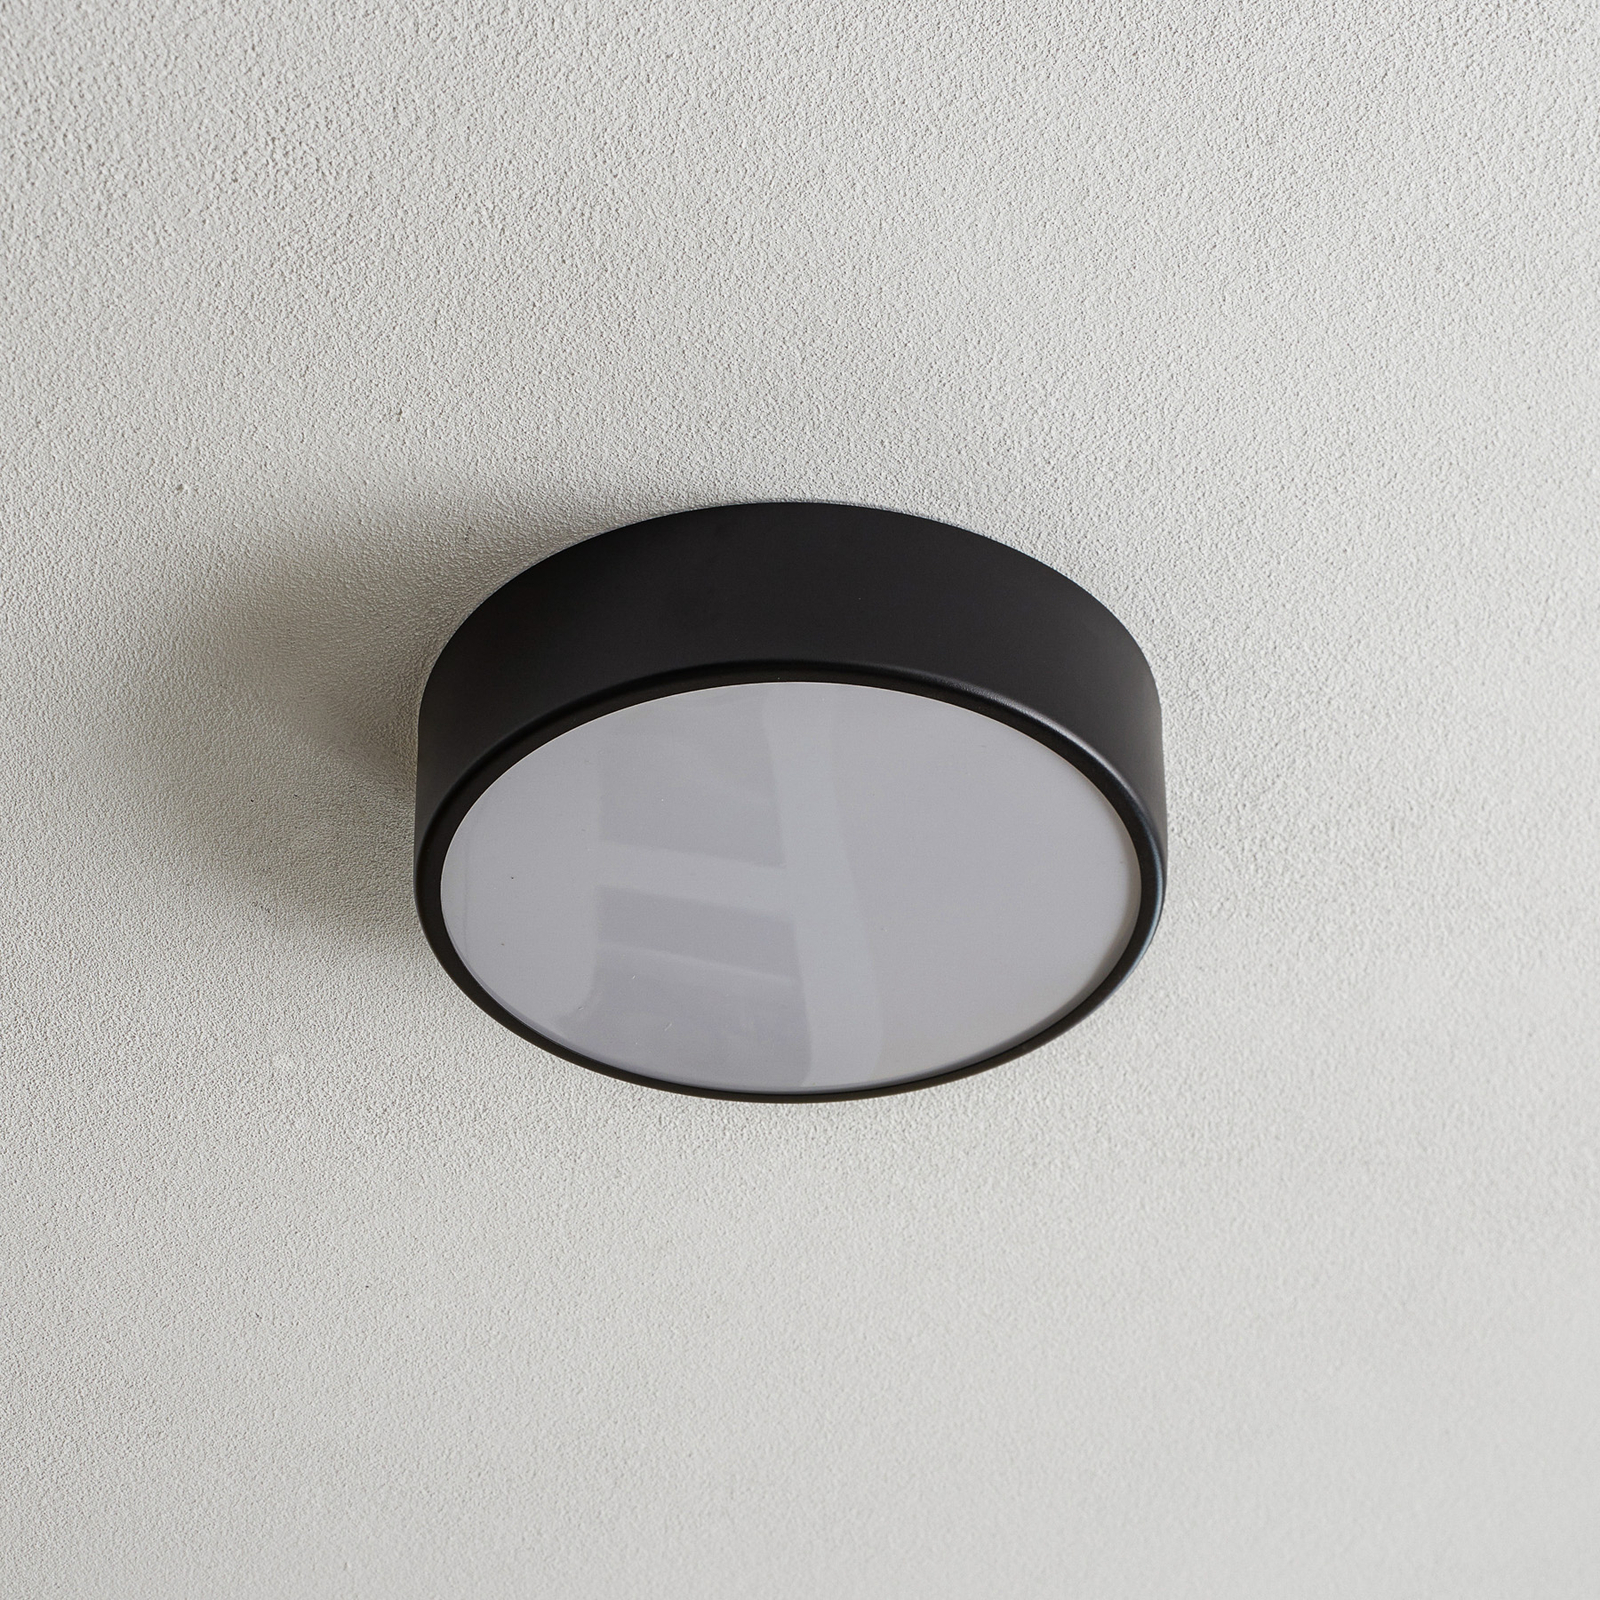 Cleo 300 ceiling light, IP54, Ø 30 cm black